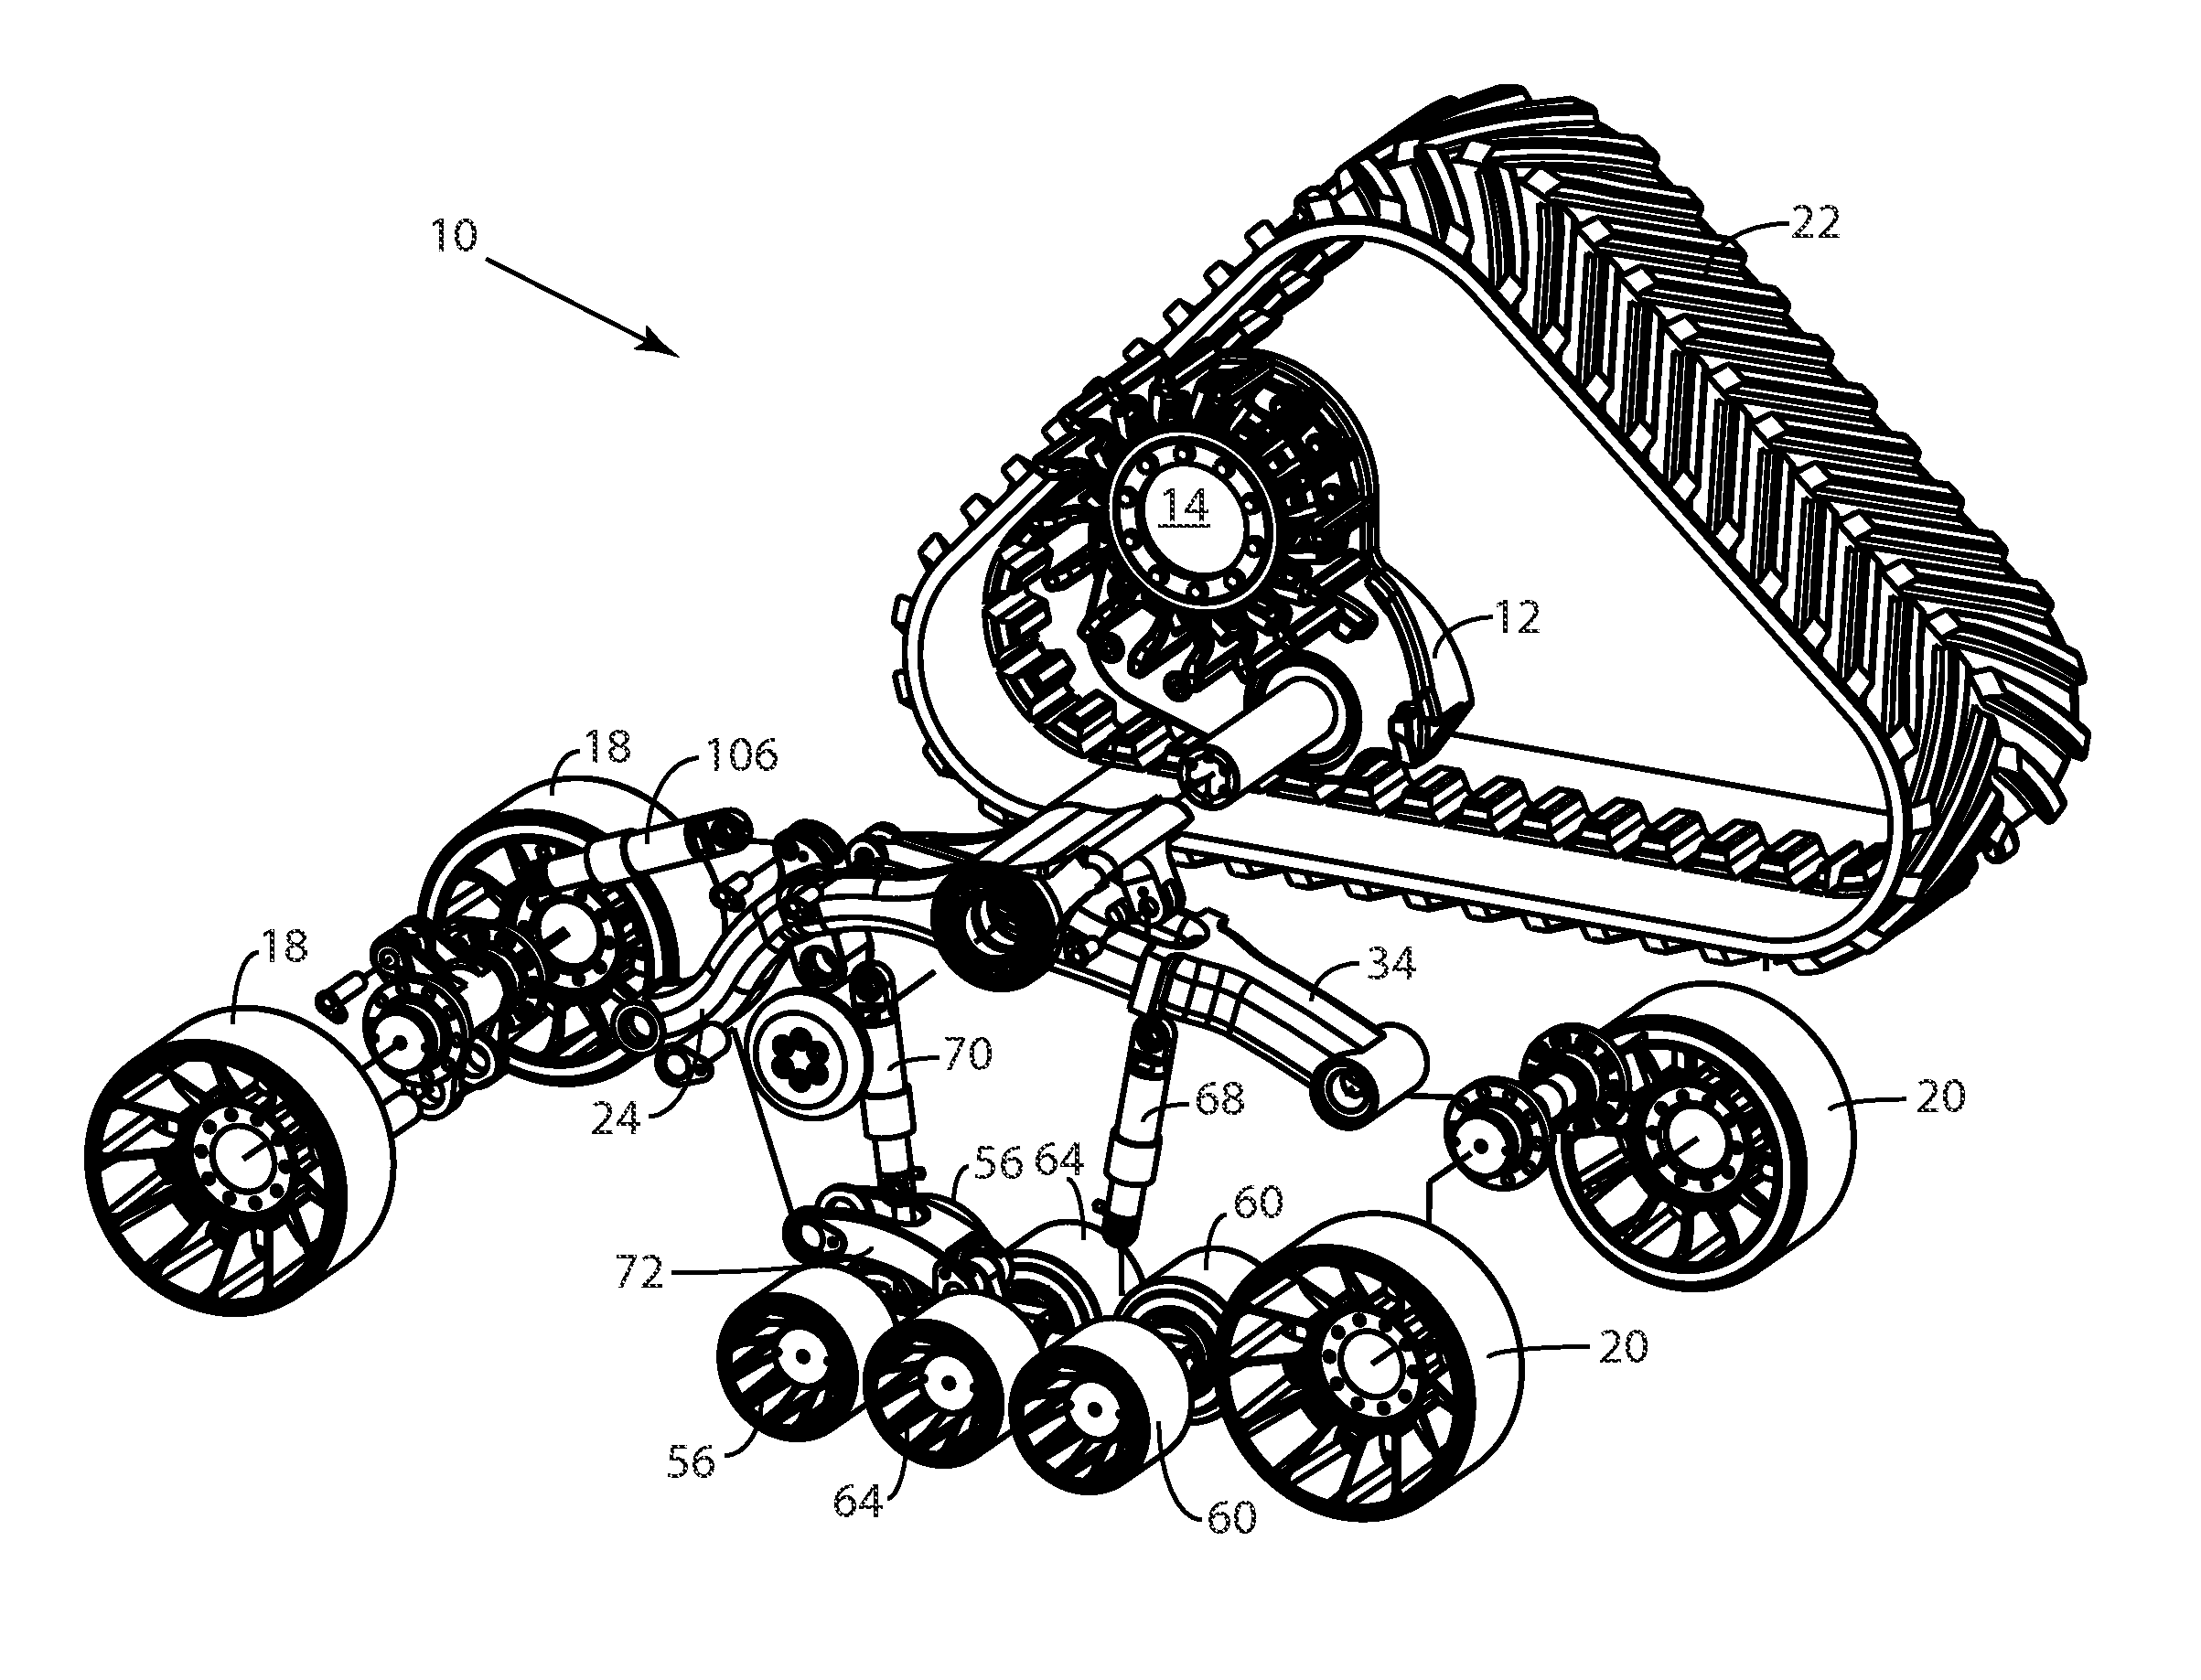 Track-module bogie-suspension system